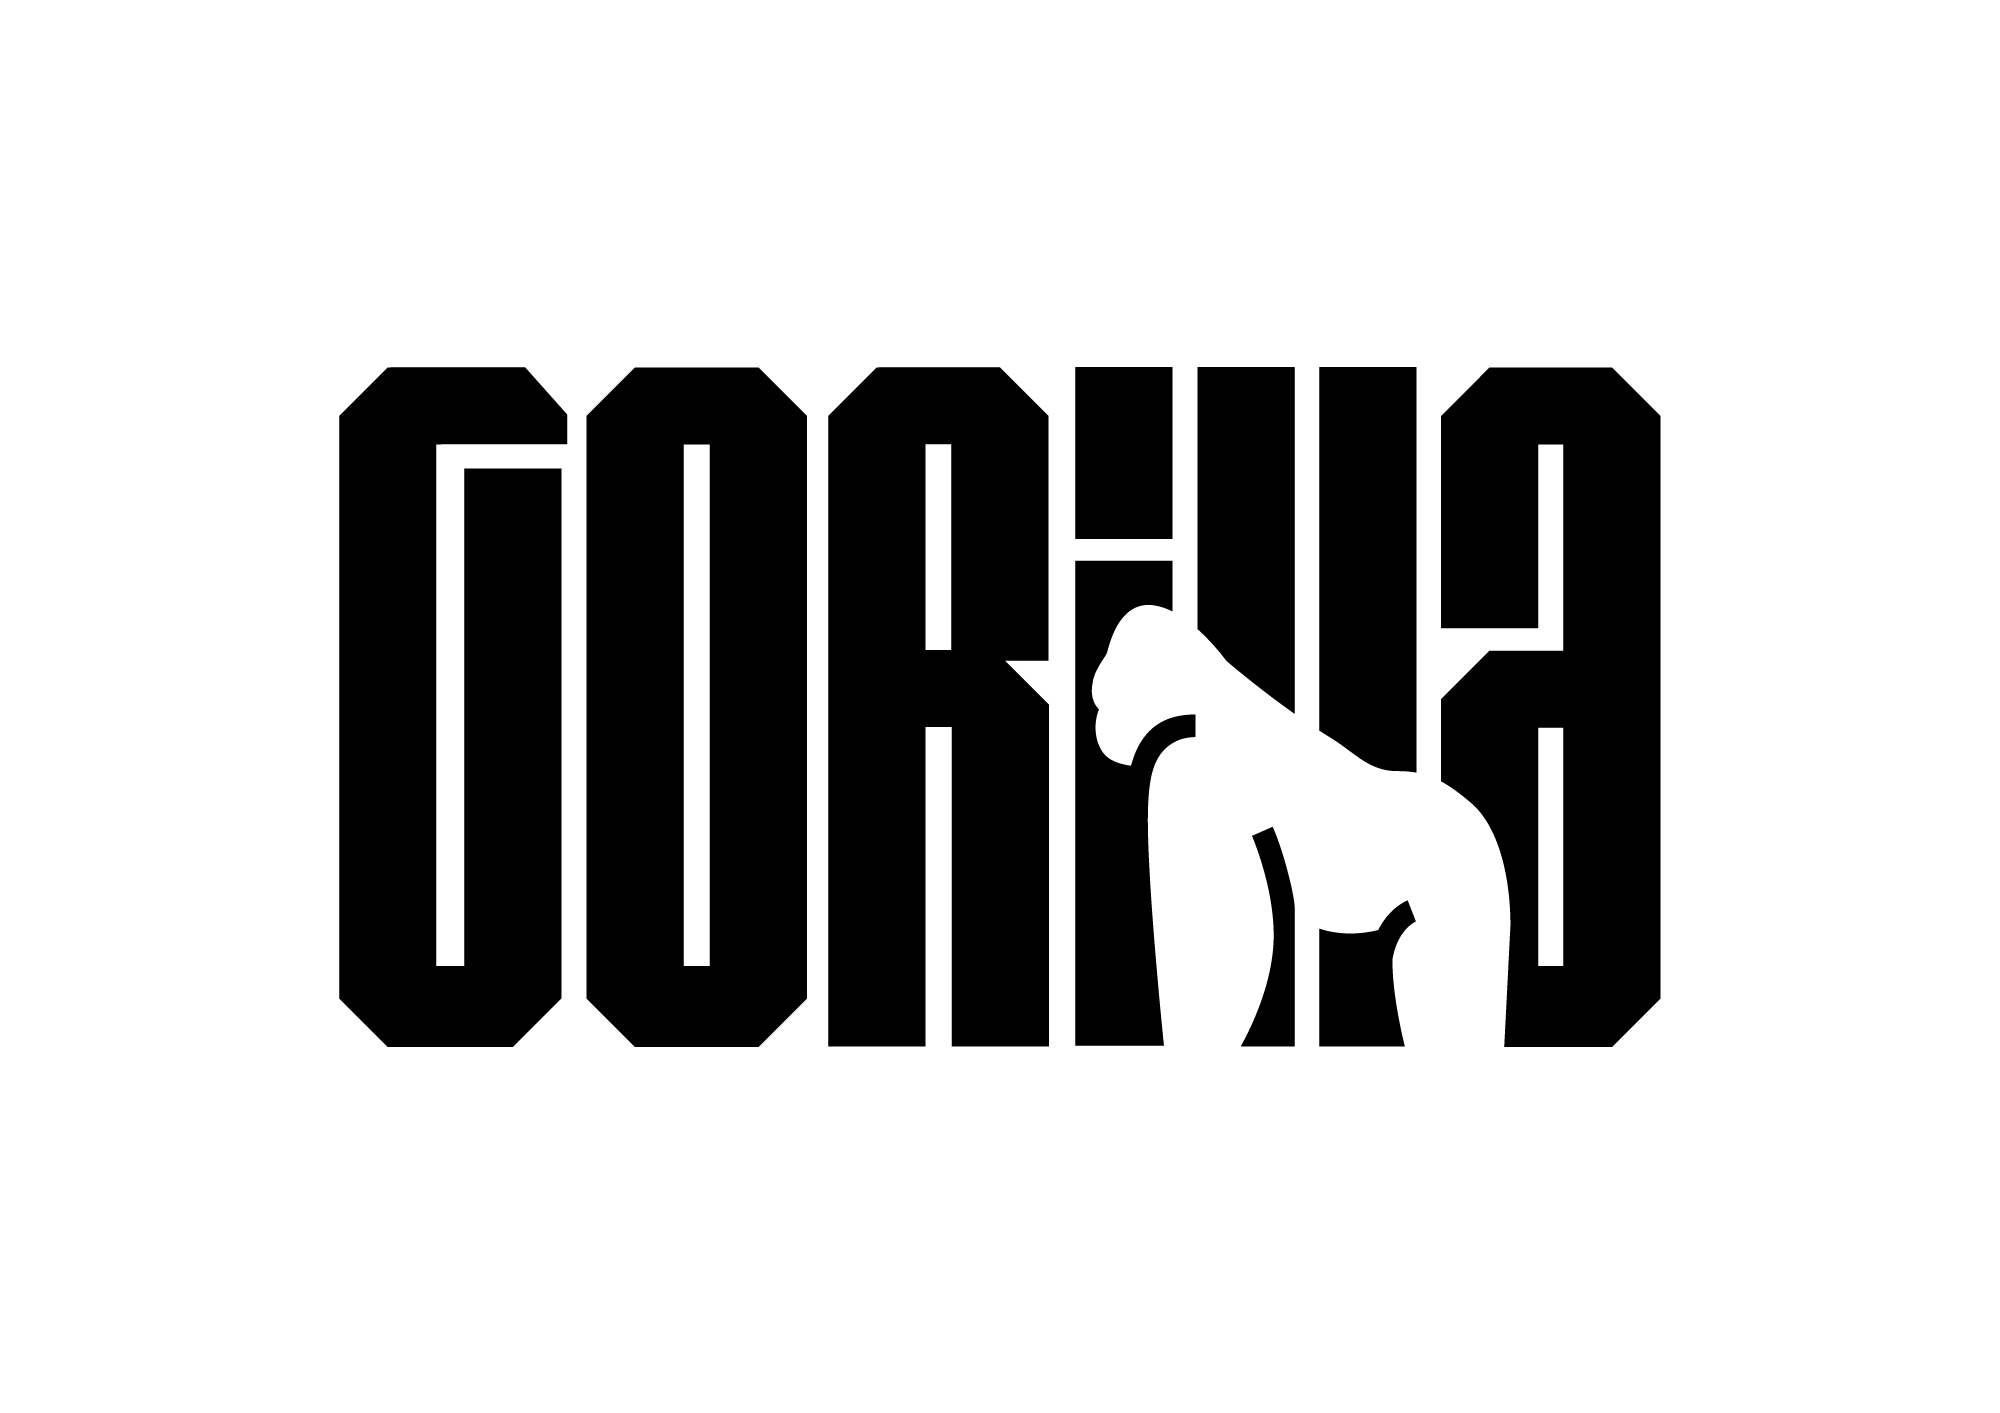 Gorilla_Logo